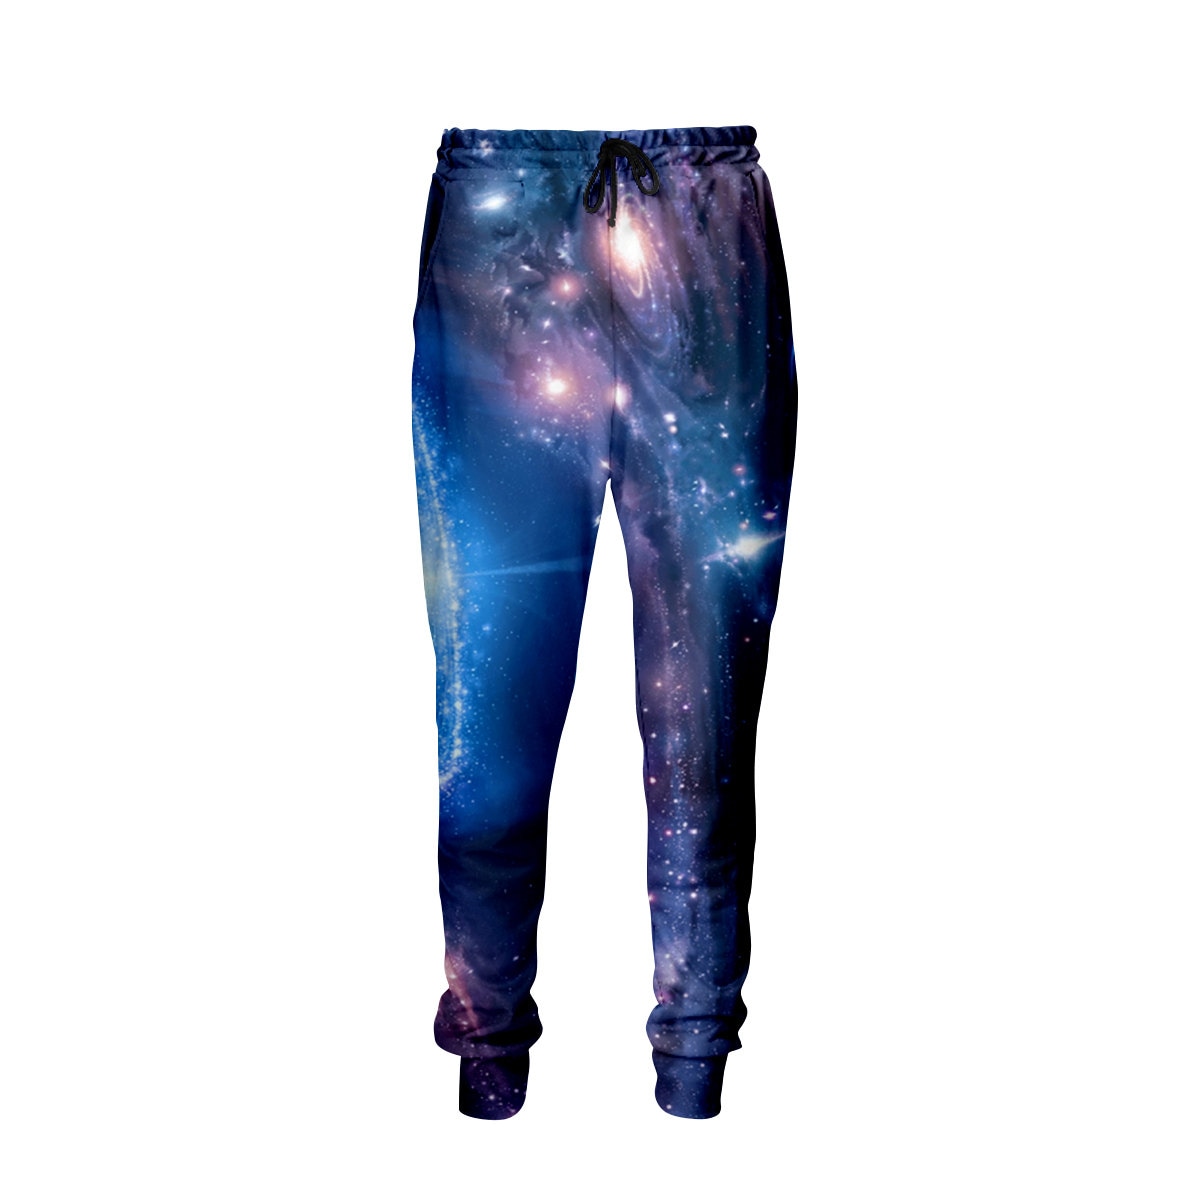 Galaxy Jogger pants Sweatpants